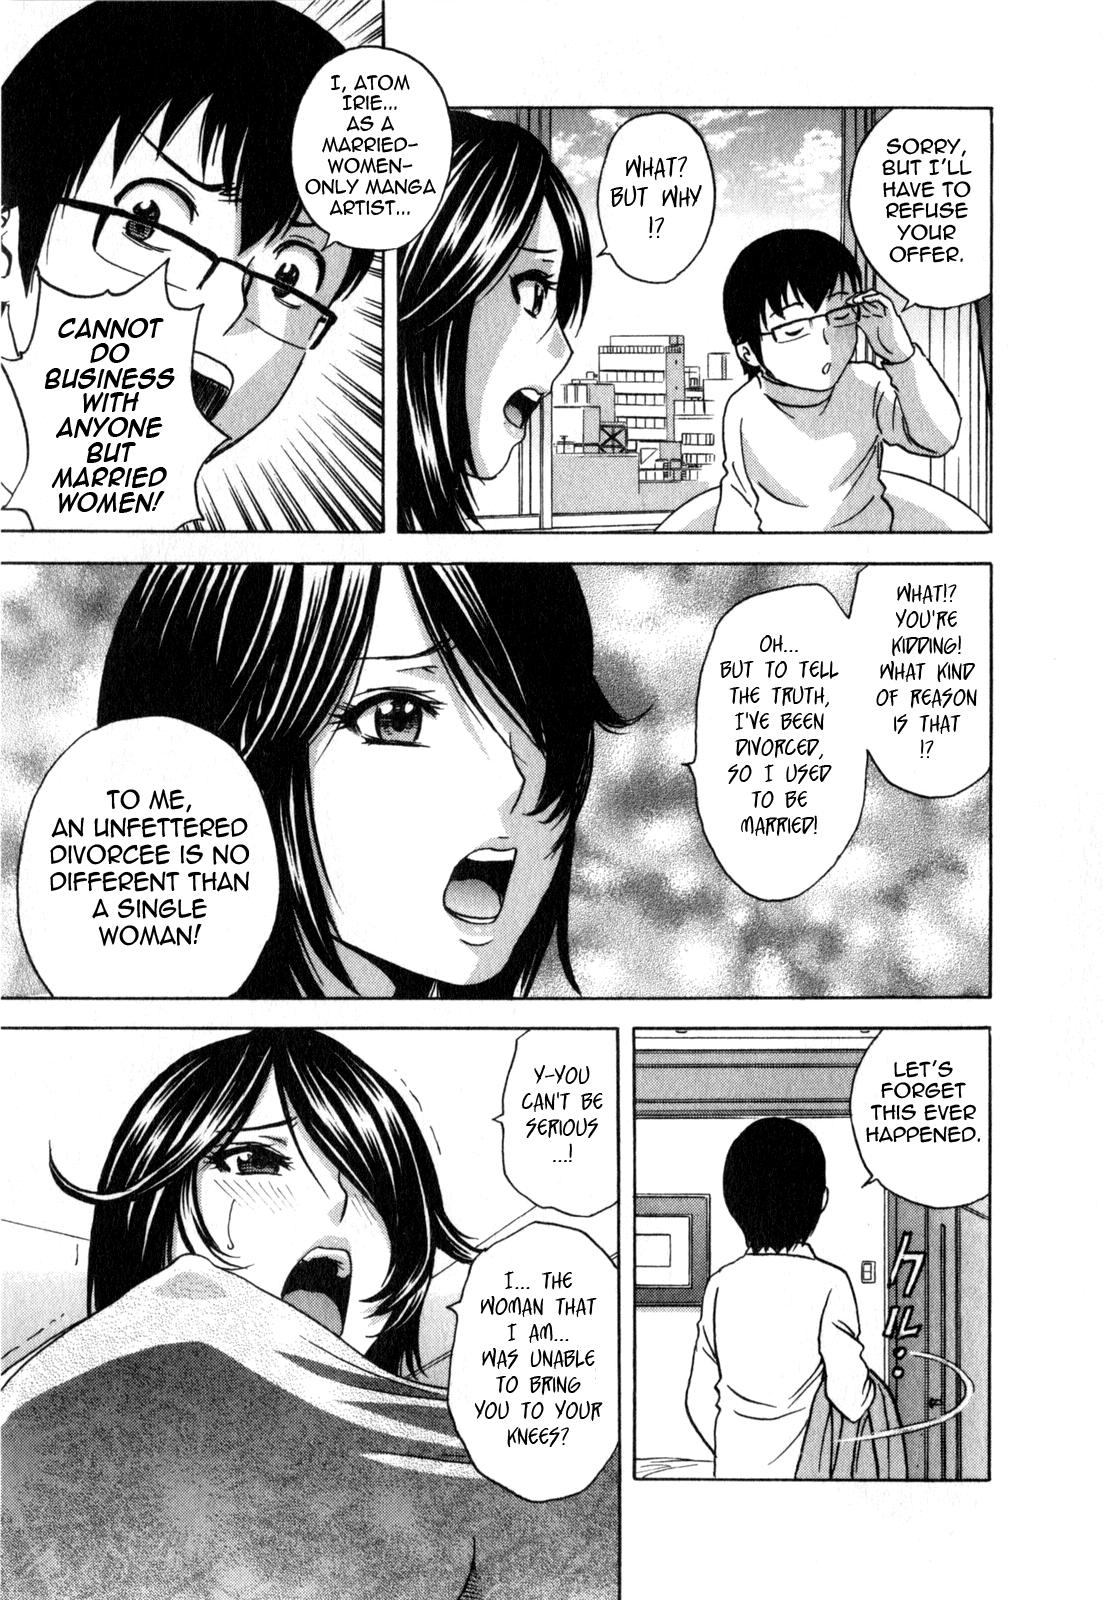 [Hidemaru] Life with Married Women Just Like a Manga 3 - Ch. 1-6 [English] {Tadanohito} 52